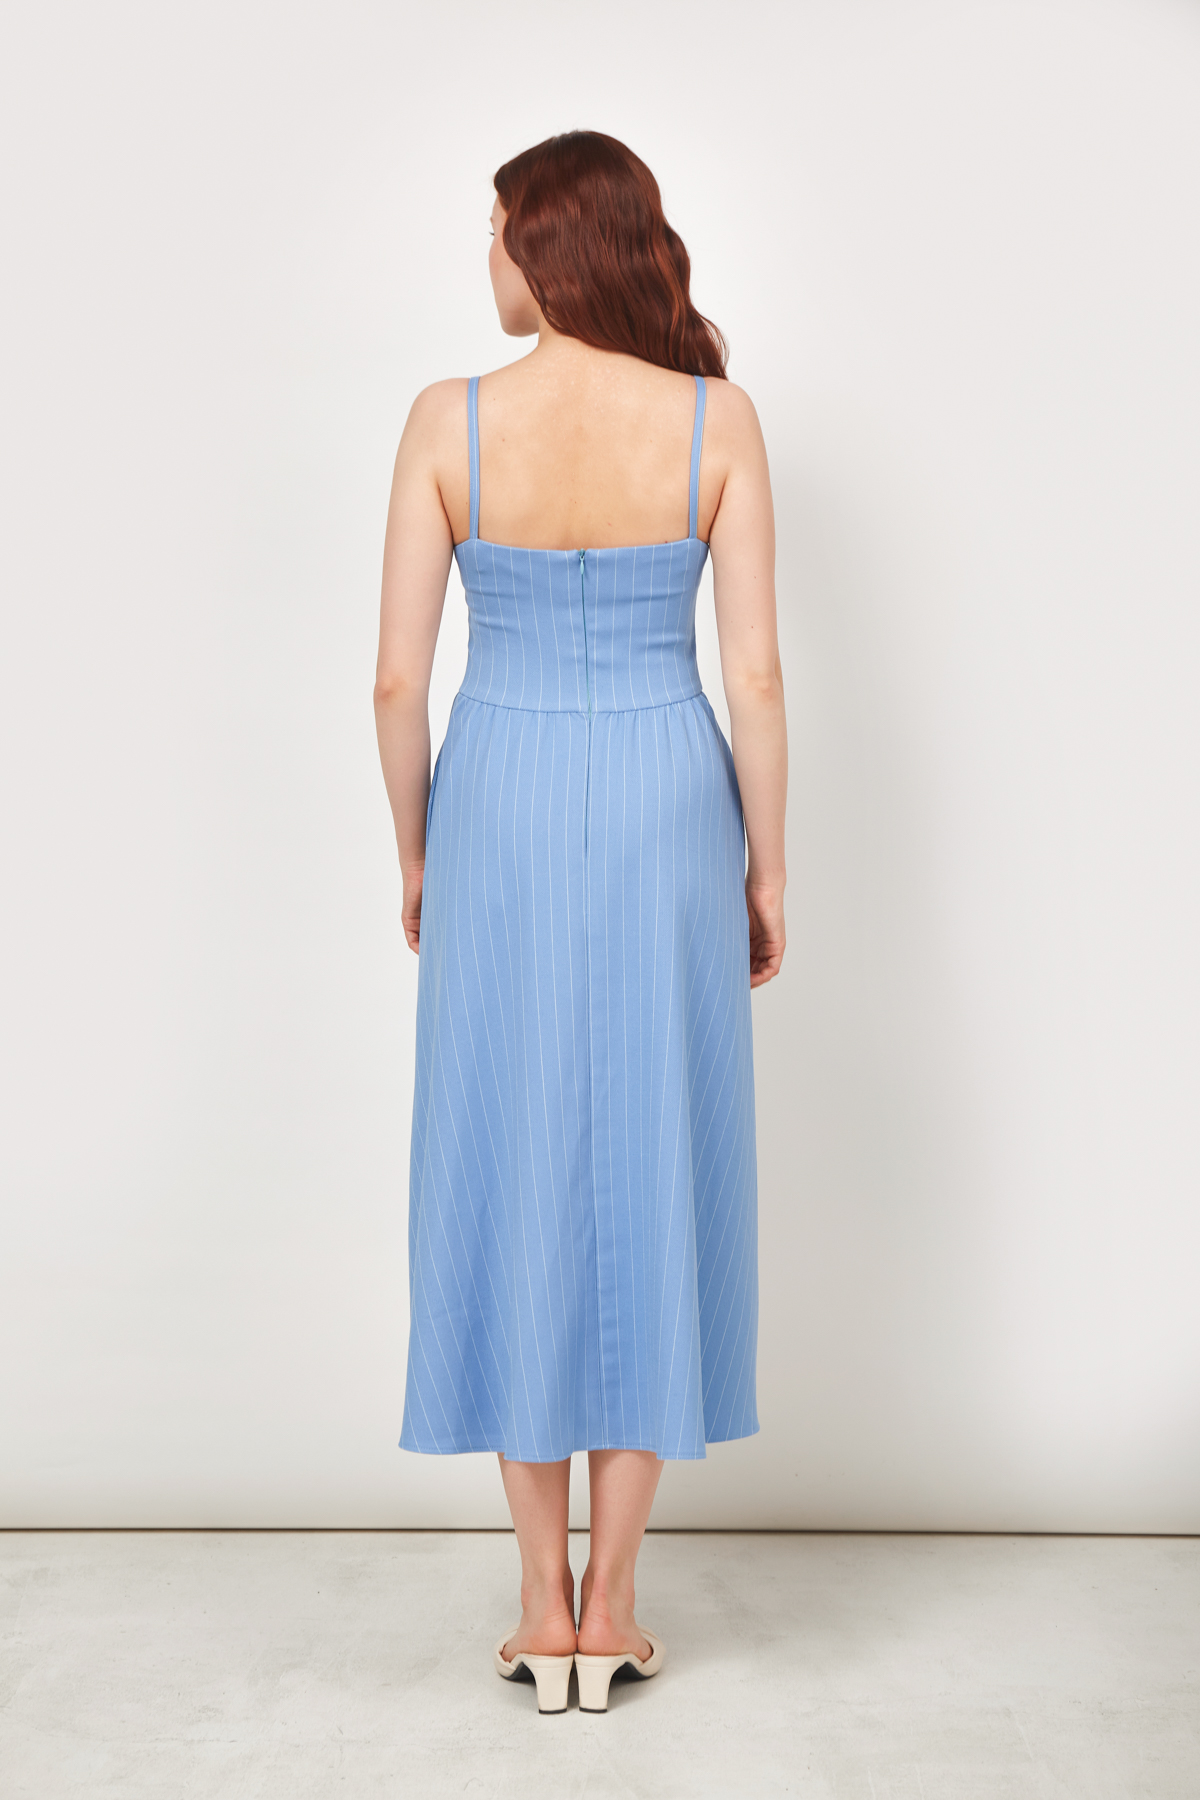 Midi dress blue with white stripes, photo 5